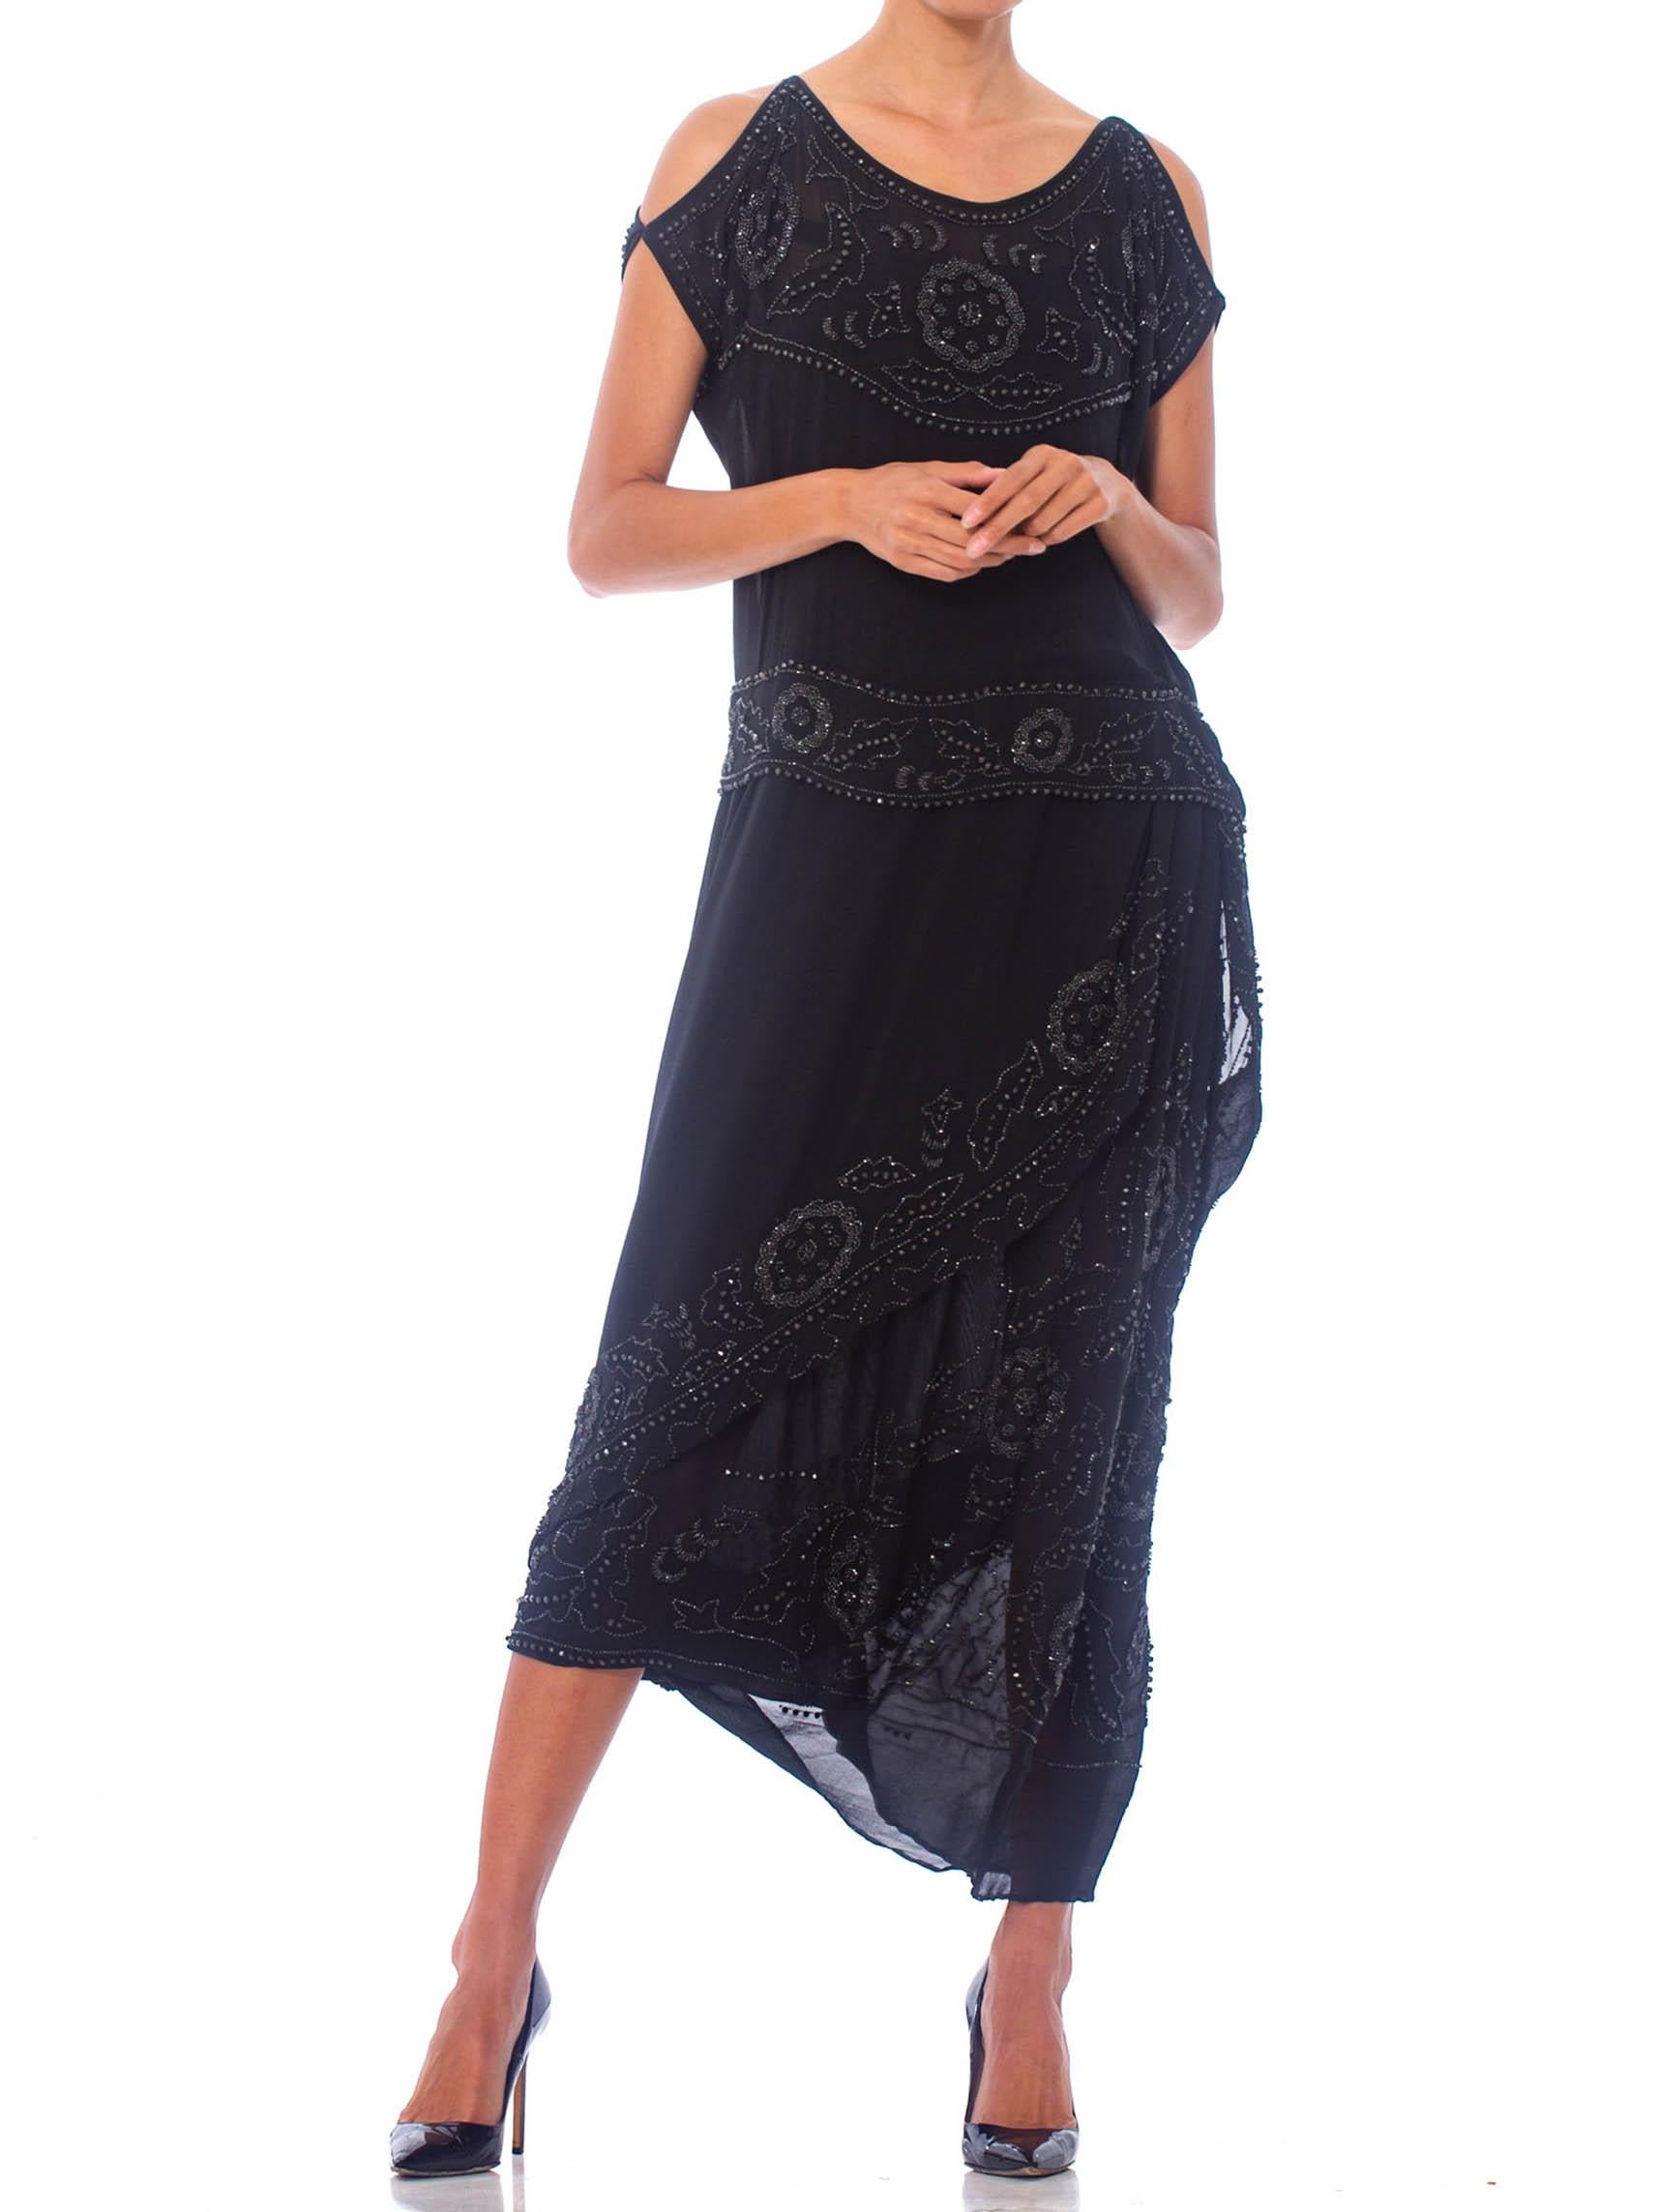 black silk crepe dress